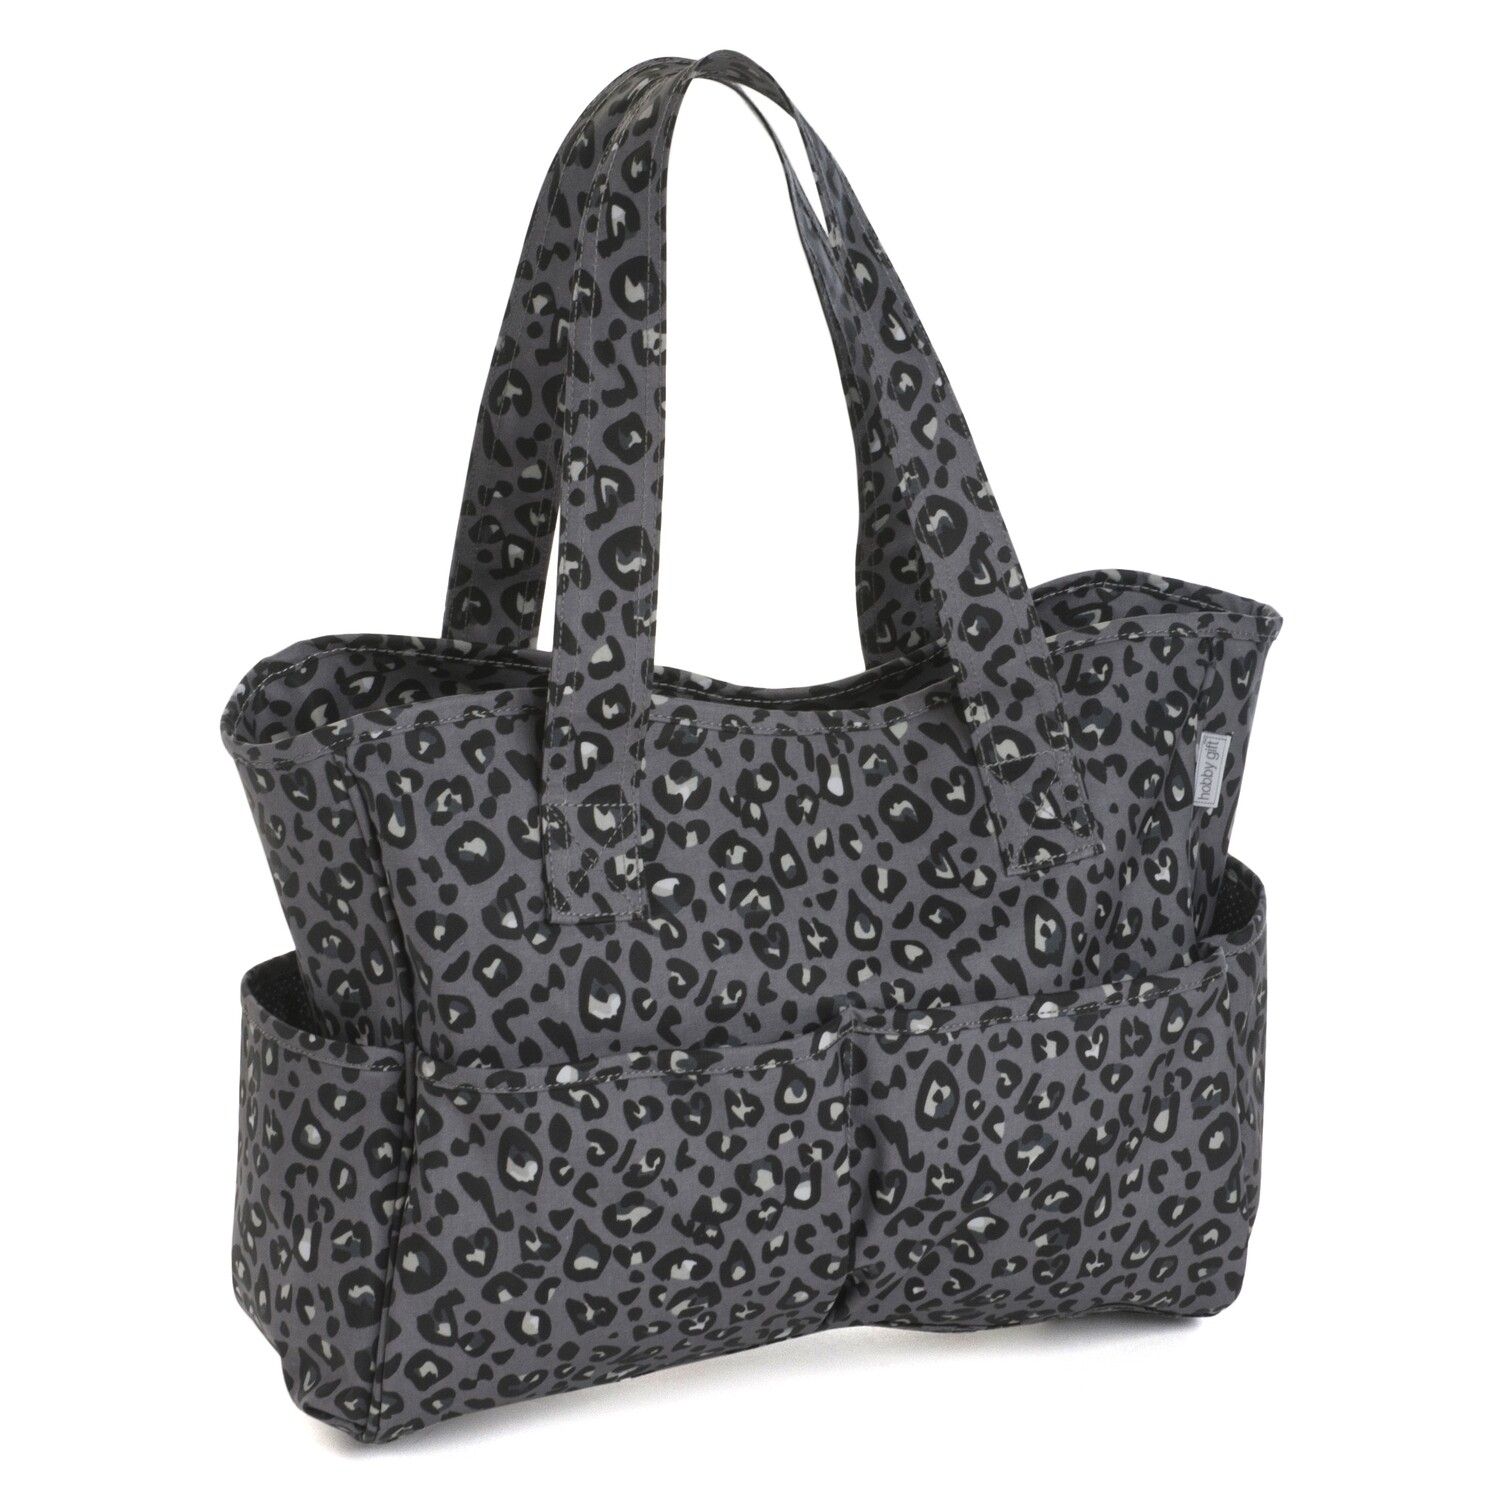 Craft Bag - Leopard